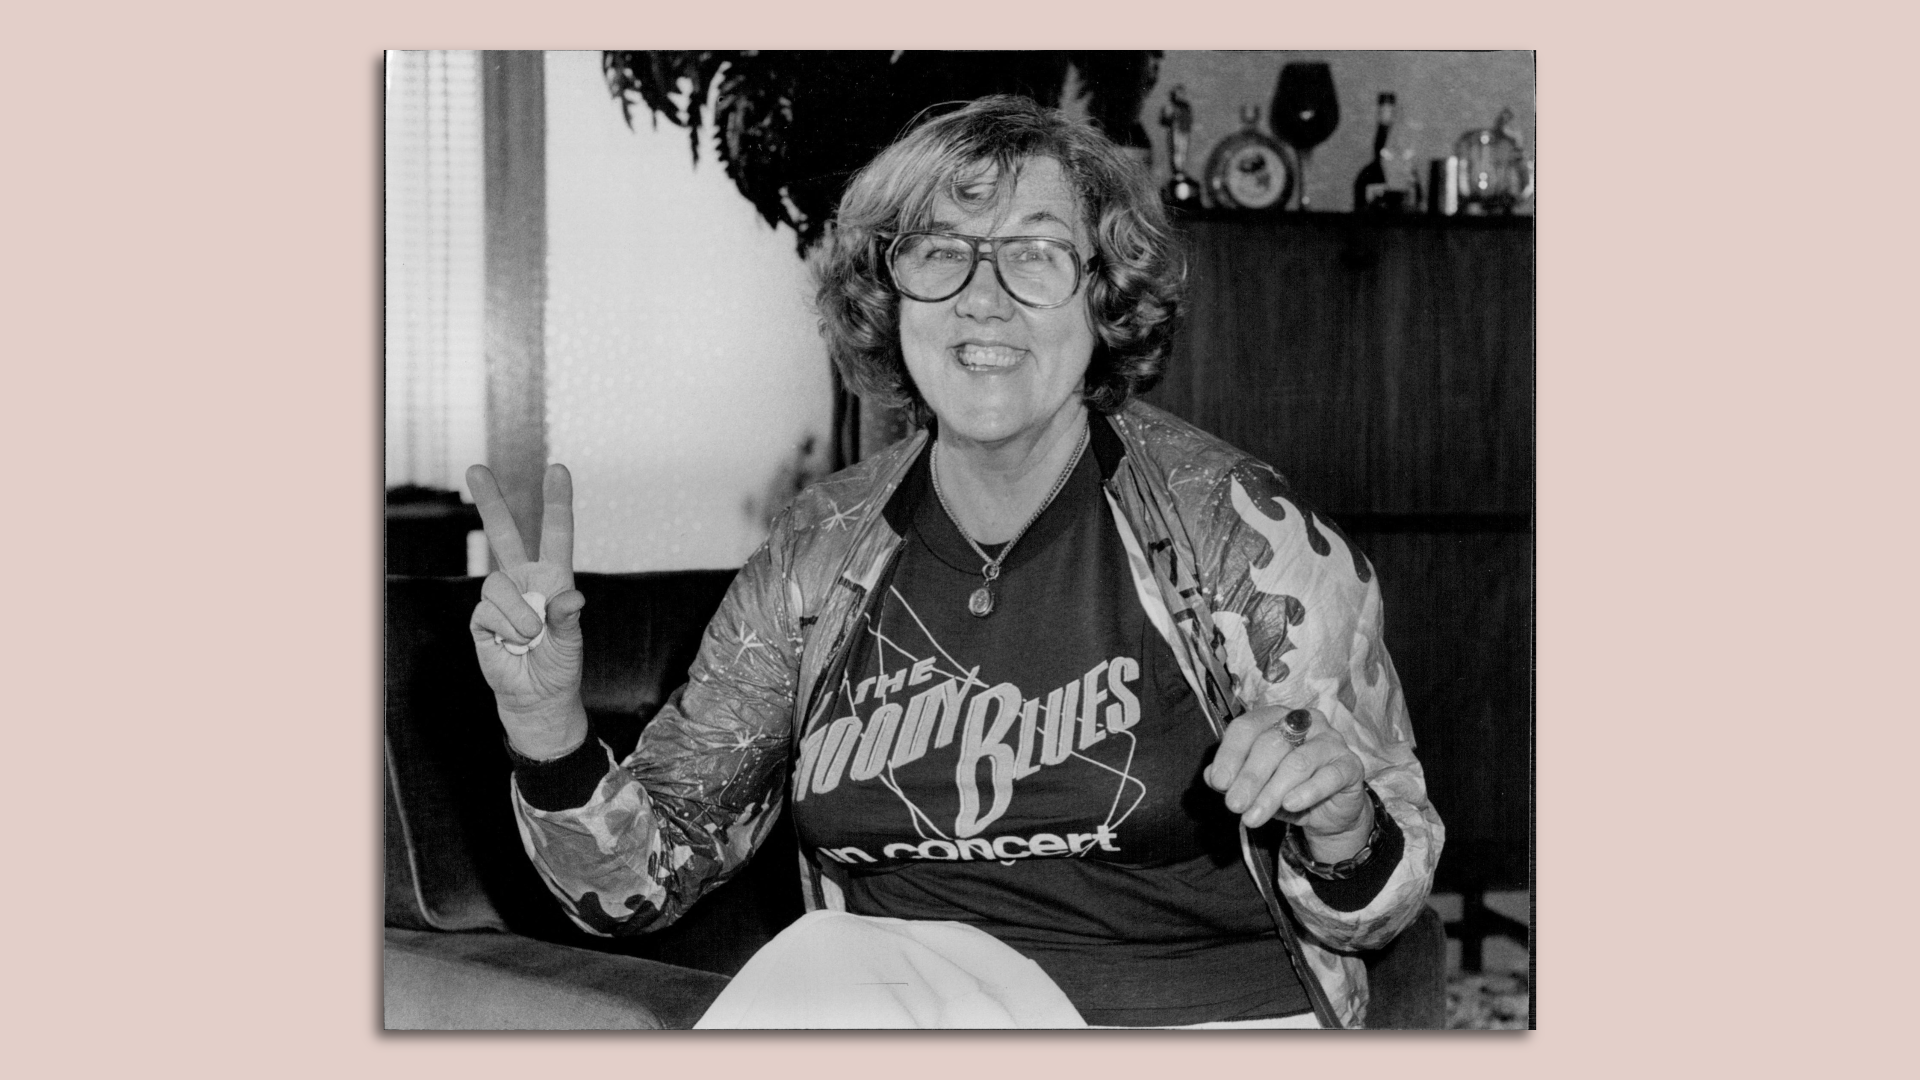 Black and white image of Jane Scott flashing a peace sign.